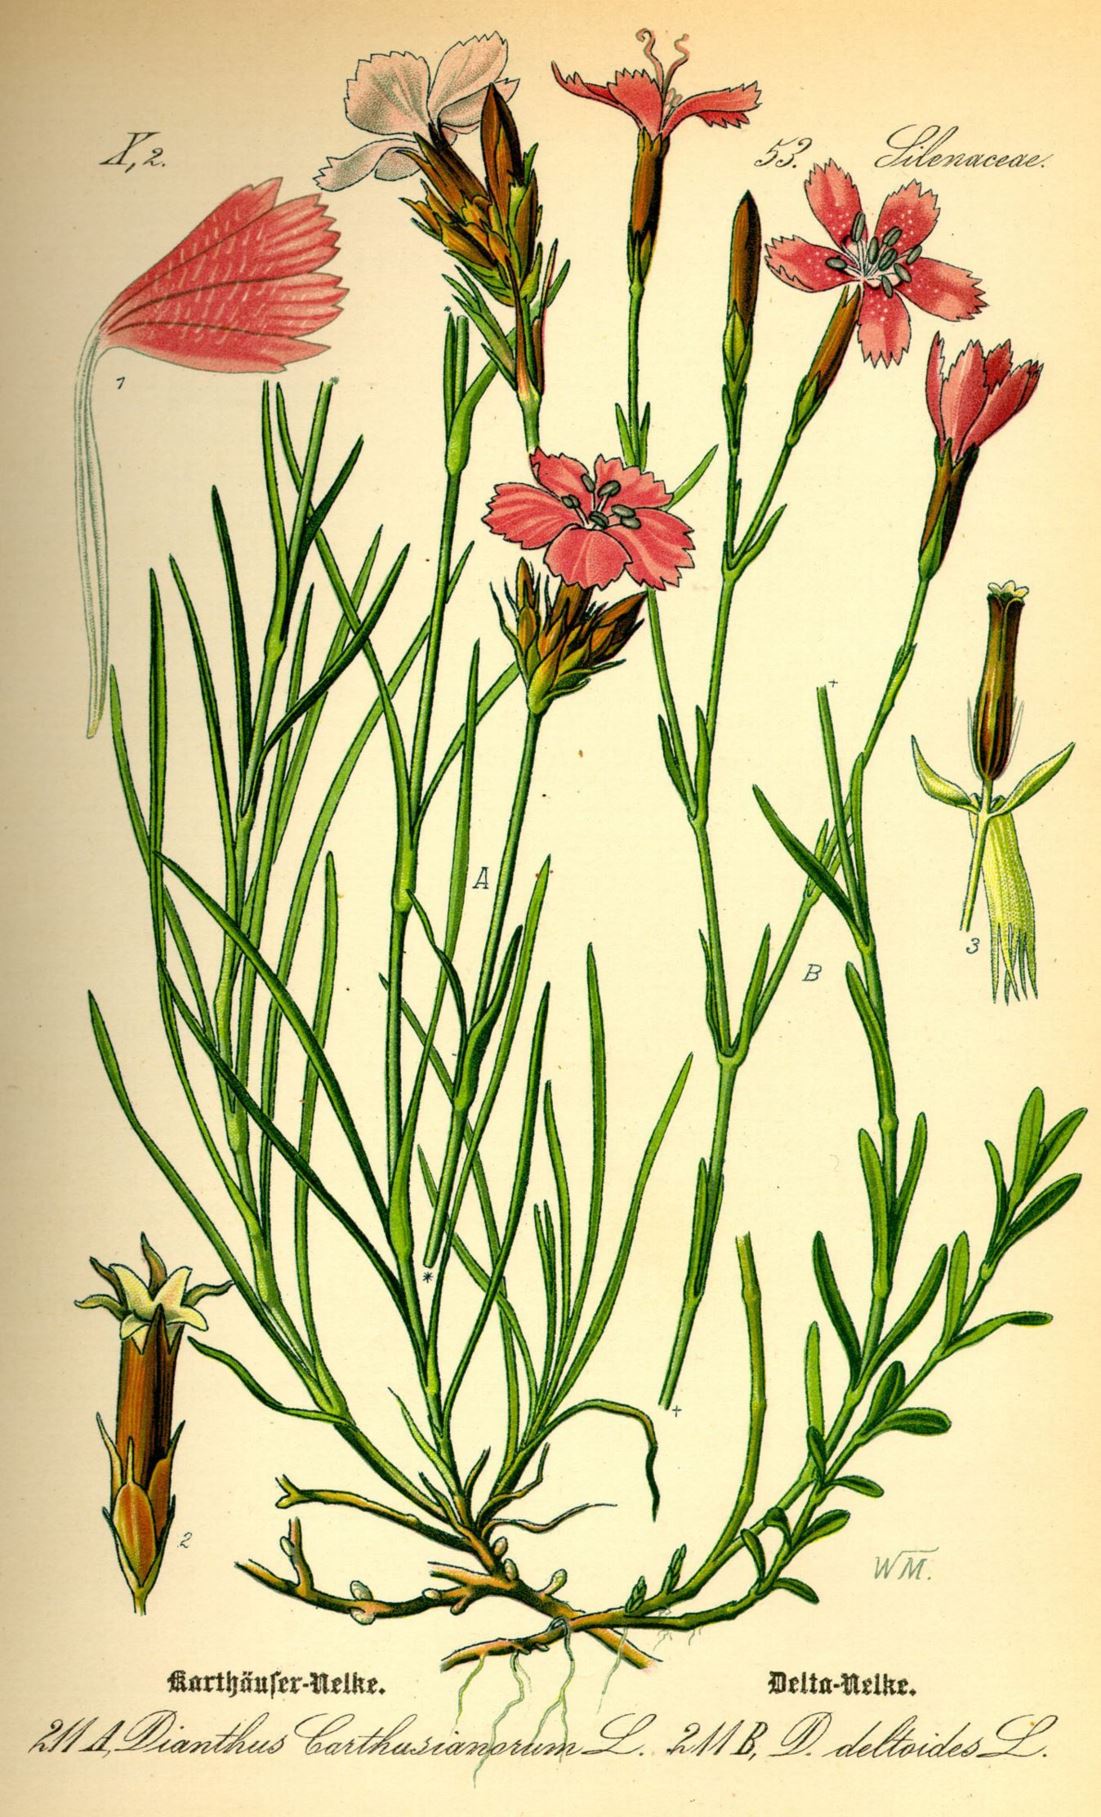 Dianthus carthusianorum - Kartuizer anjer, Сarthusian pink, Kartäusernelke